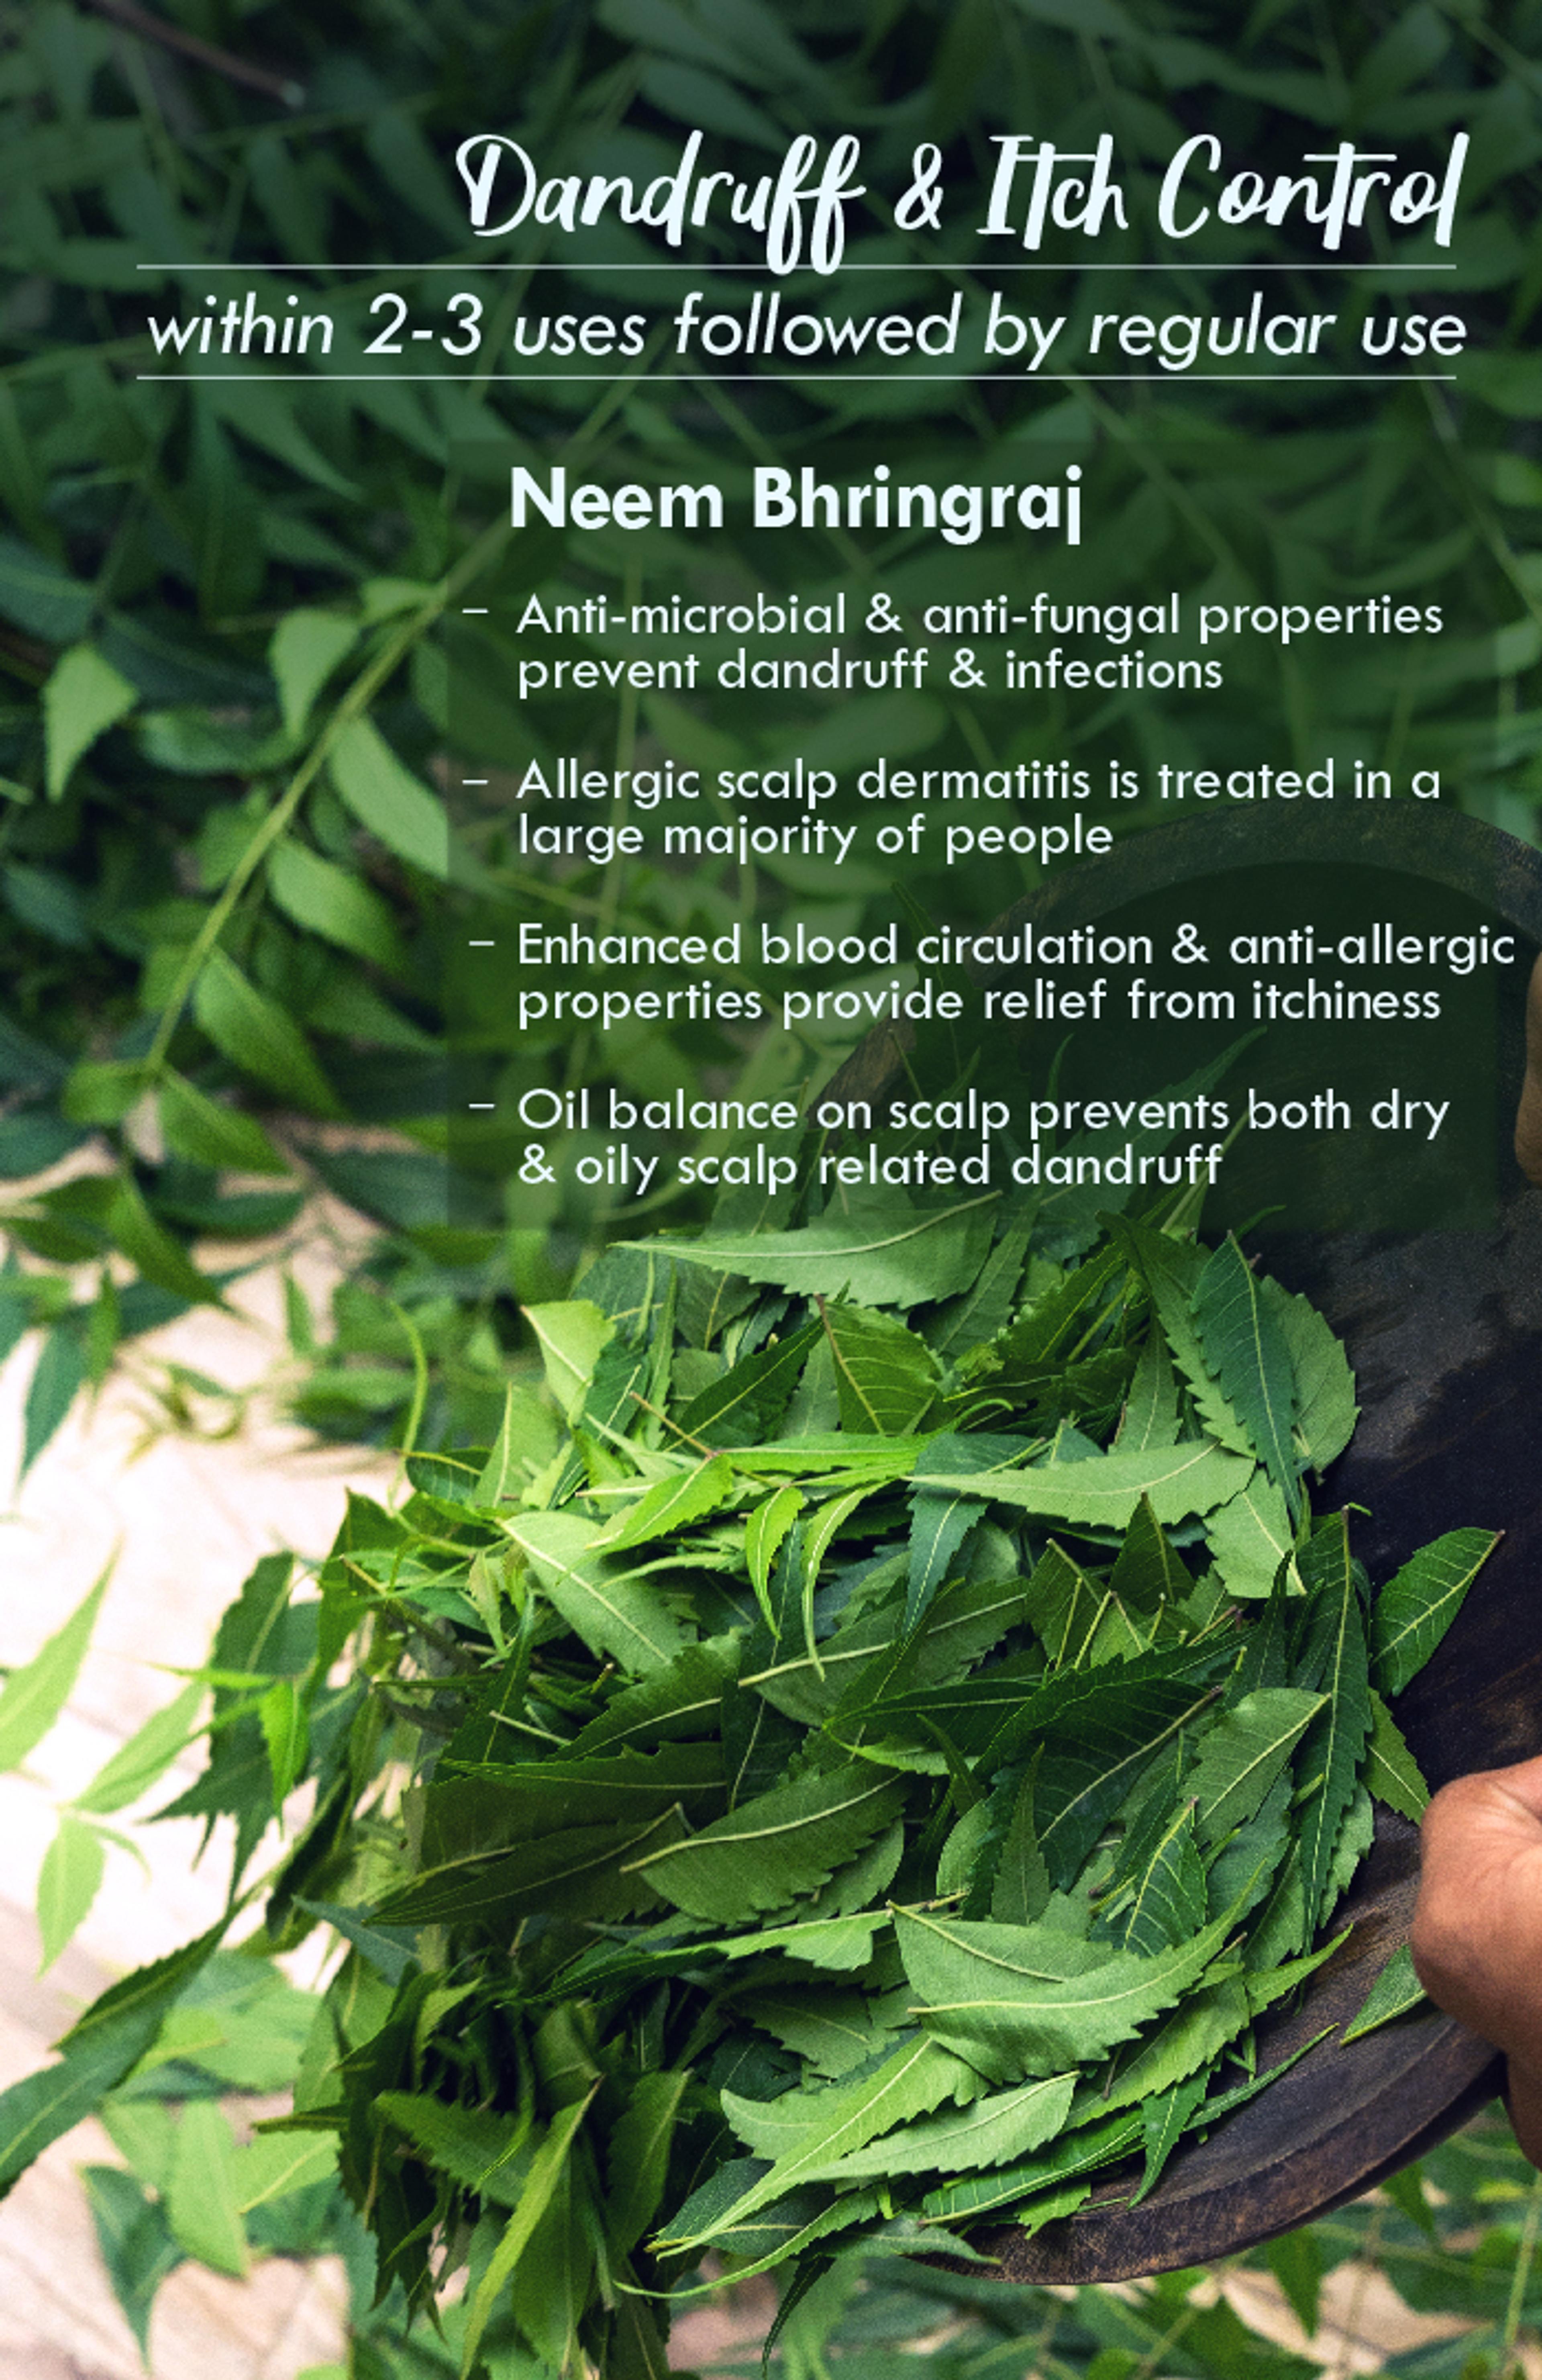 neem-bhringraj-04